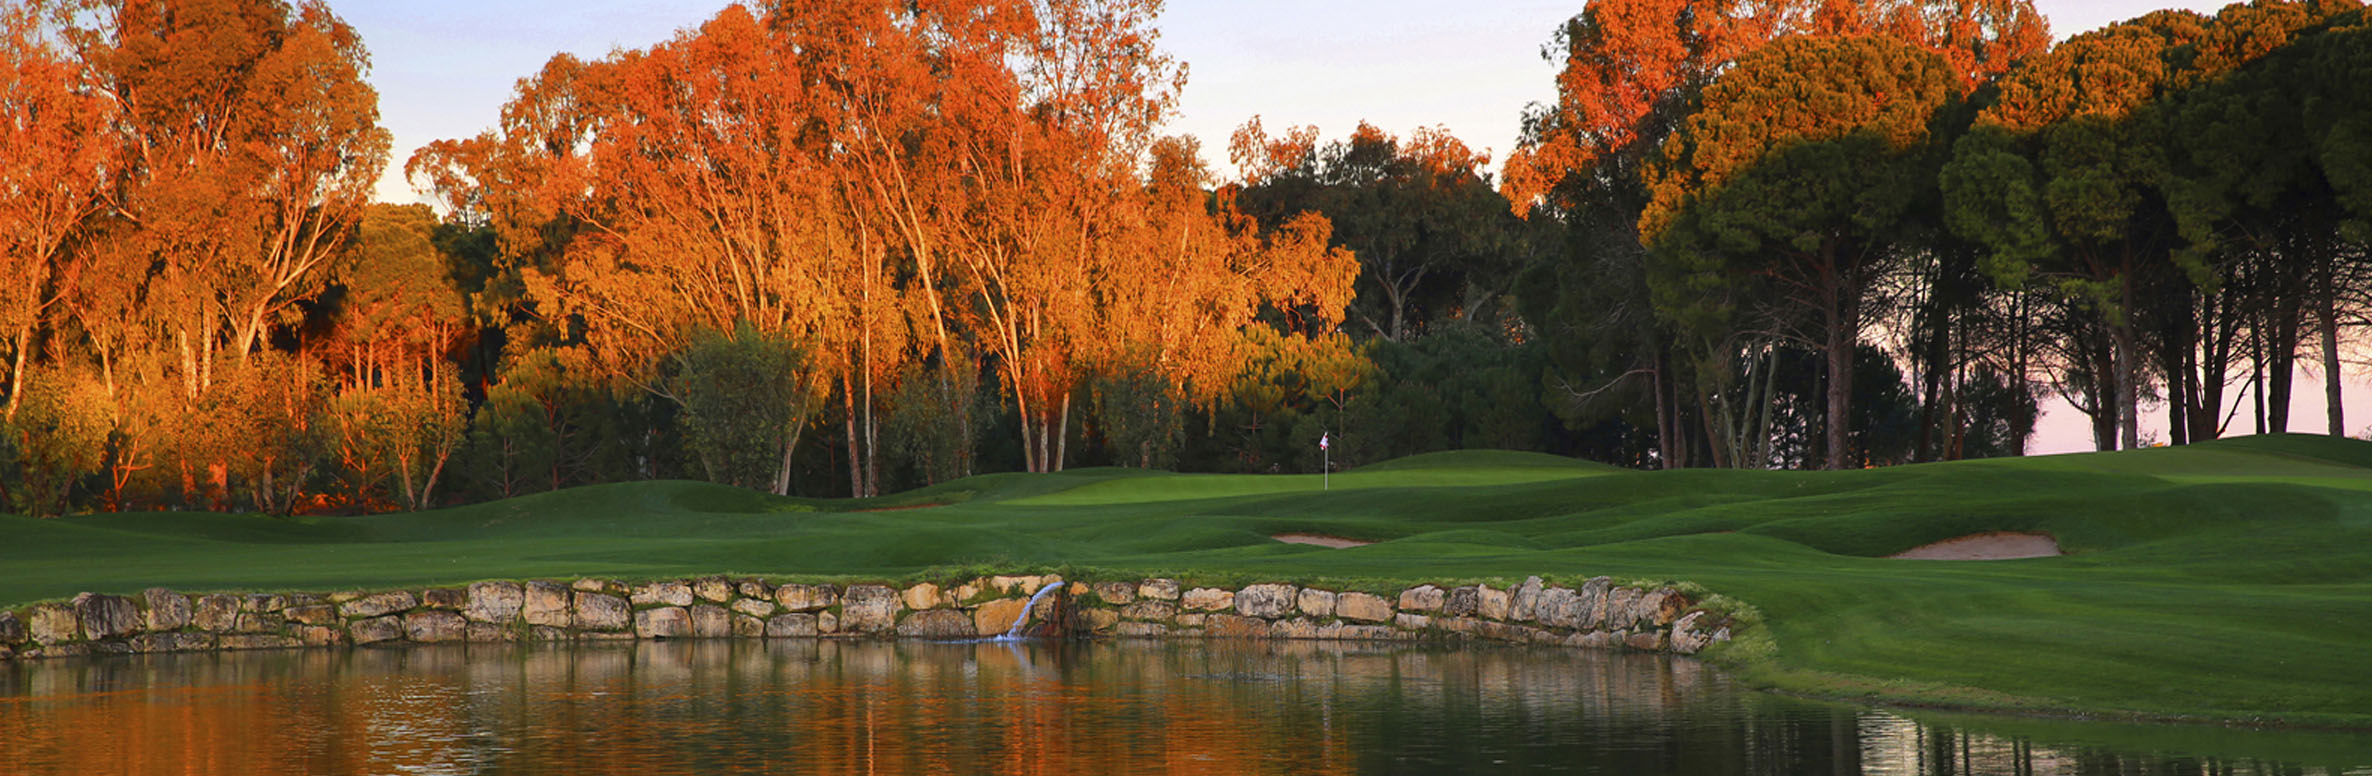 Golf Course Image - Antalya Golf Club Pasha No. 13